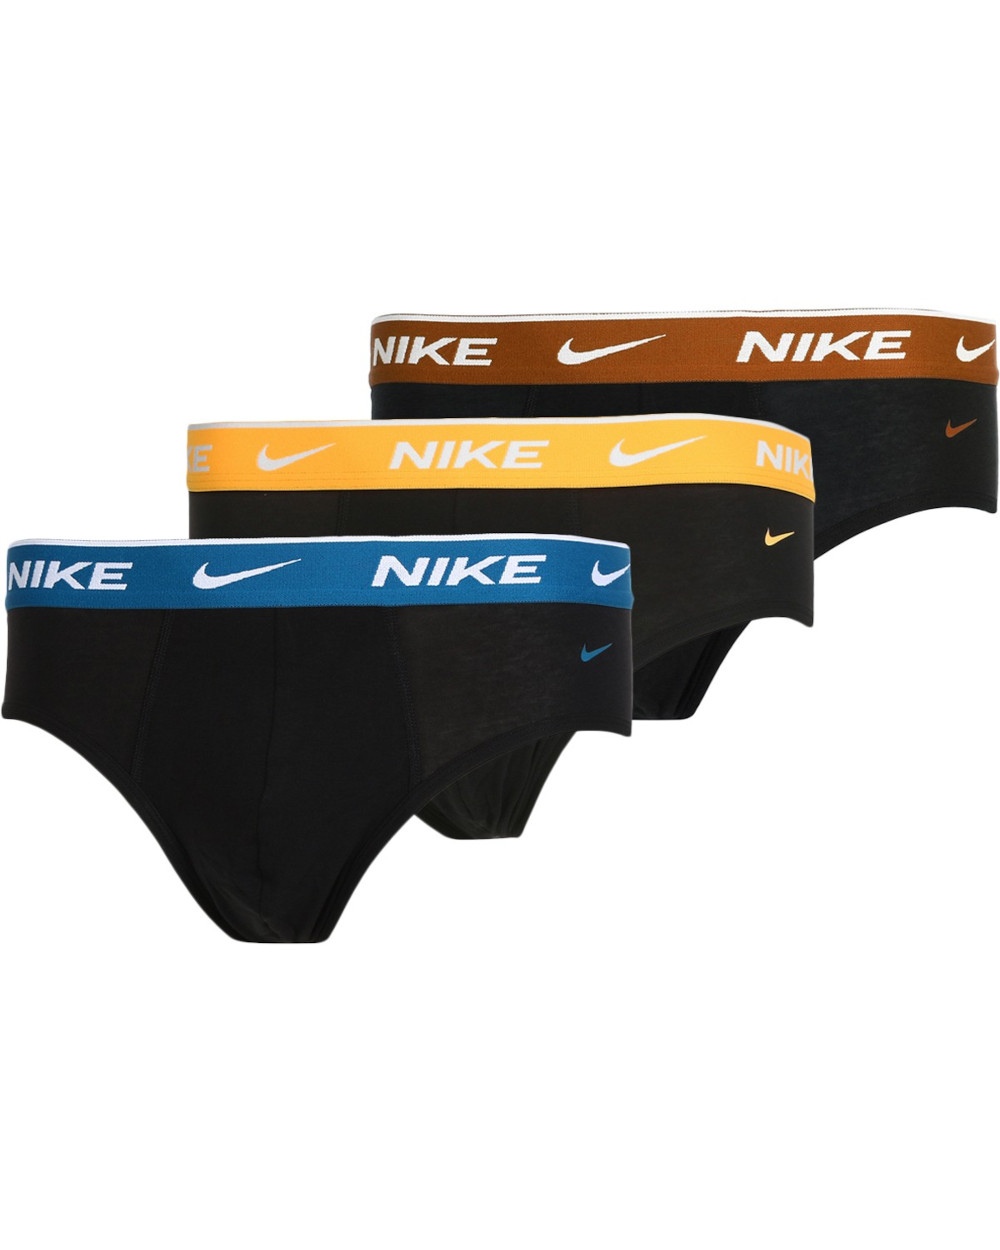  Intimo Slip Mutande UOMO Nike Underwear BRIEF Graphic 3 PACK Slip cotone